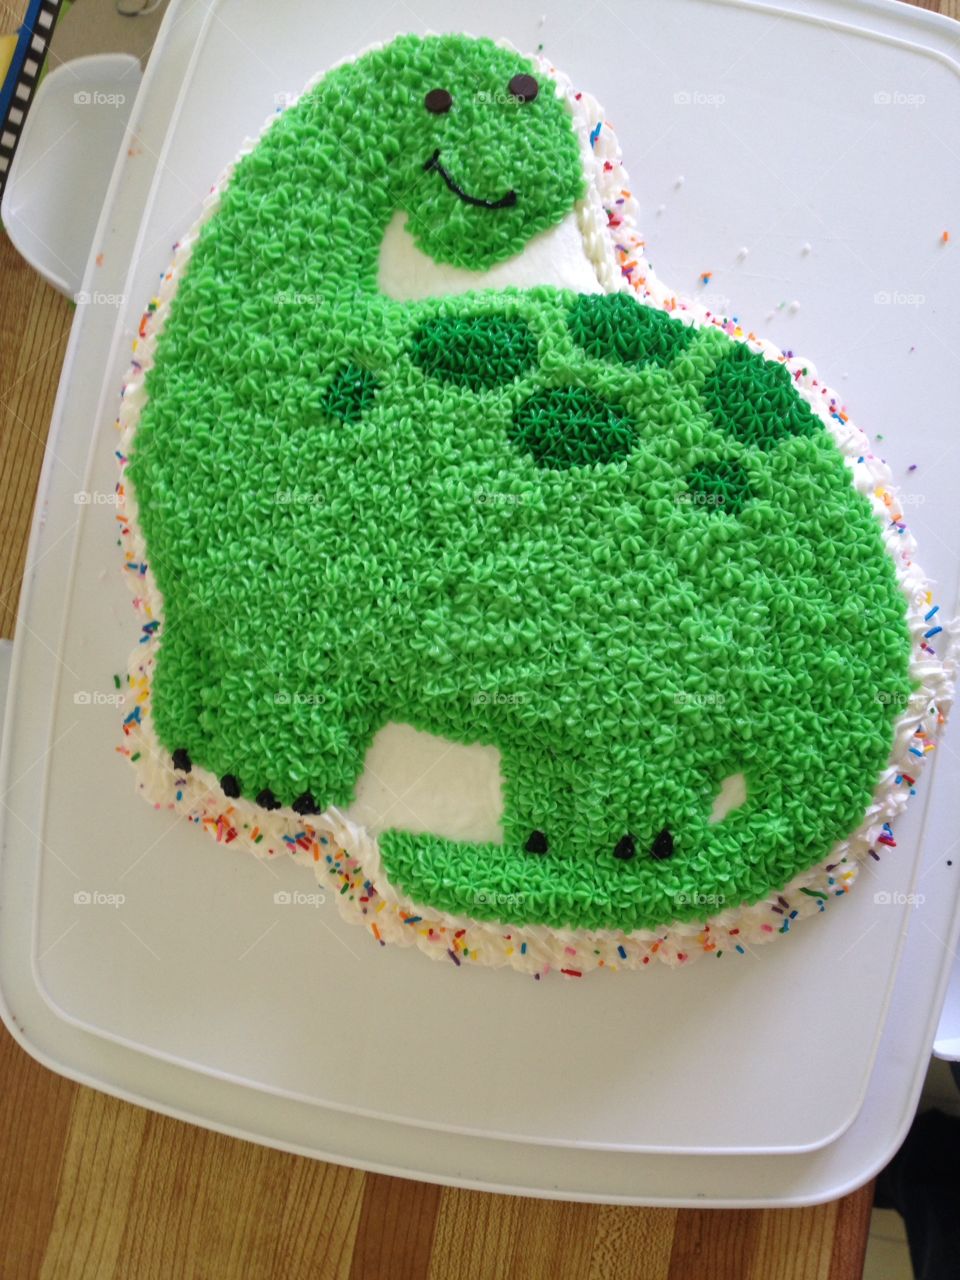 Birthday cake for my son's birthday